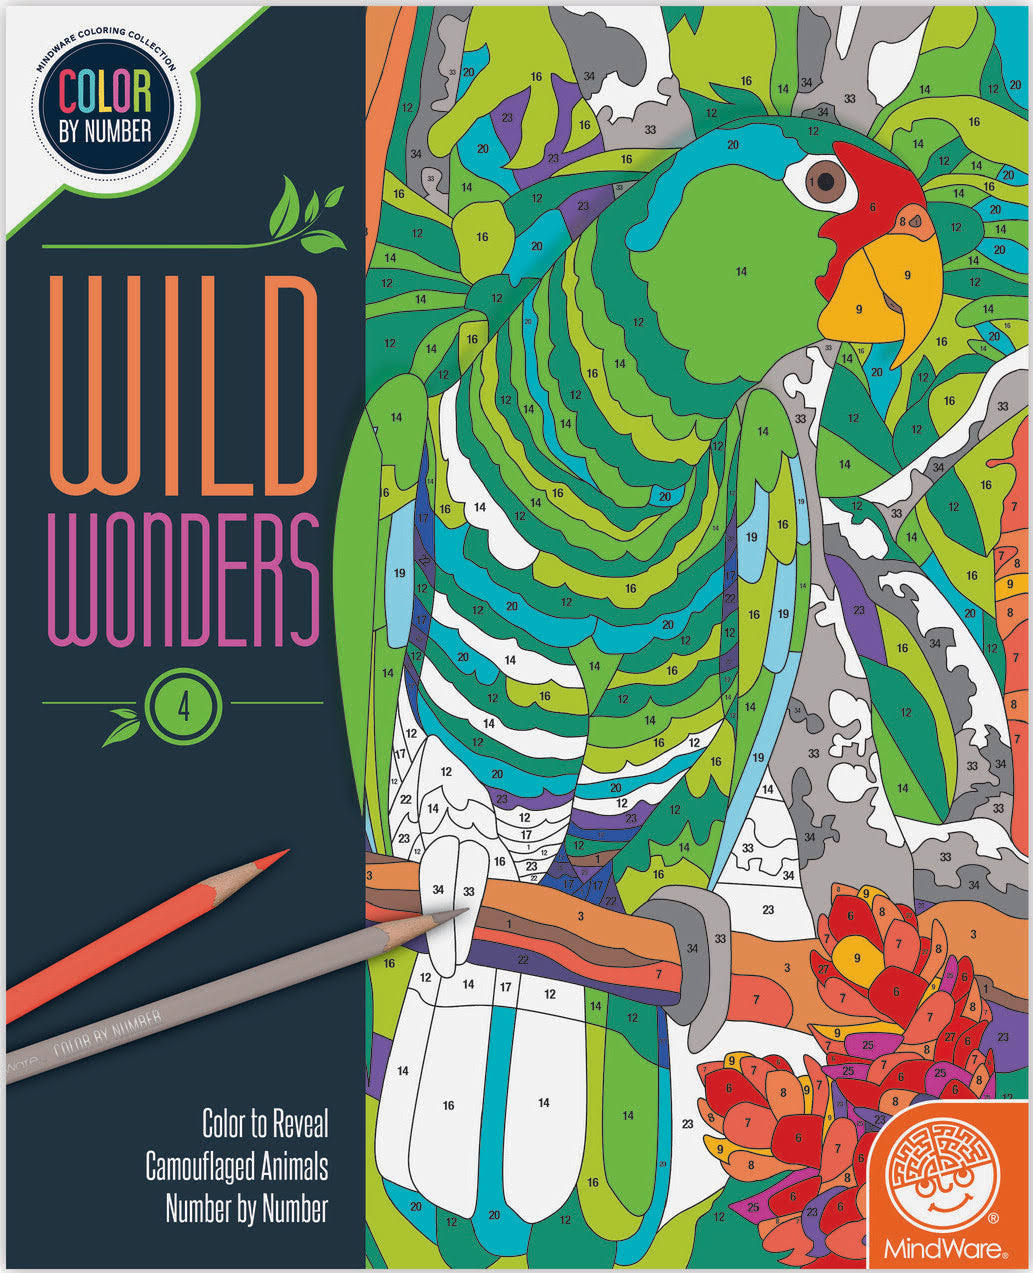 Mindware - Color by Number - Wild Wonders - Book 4